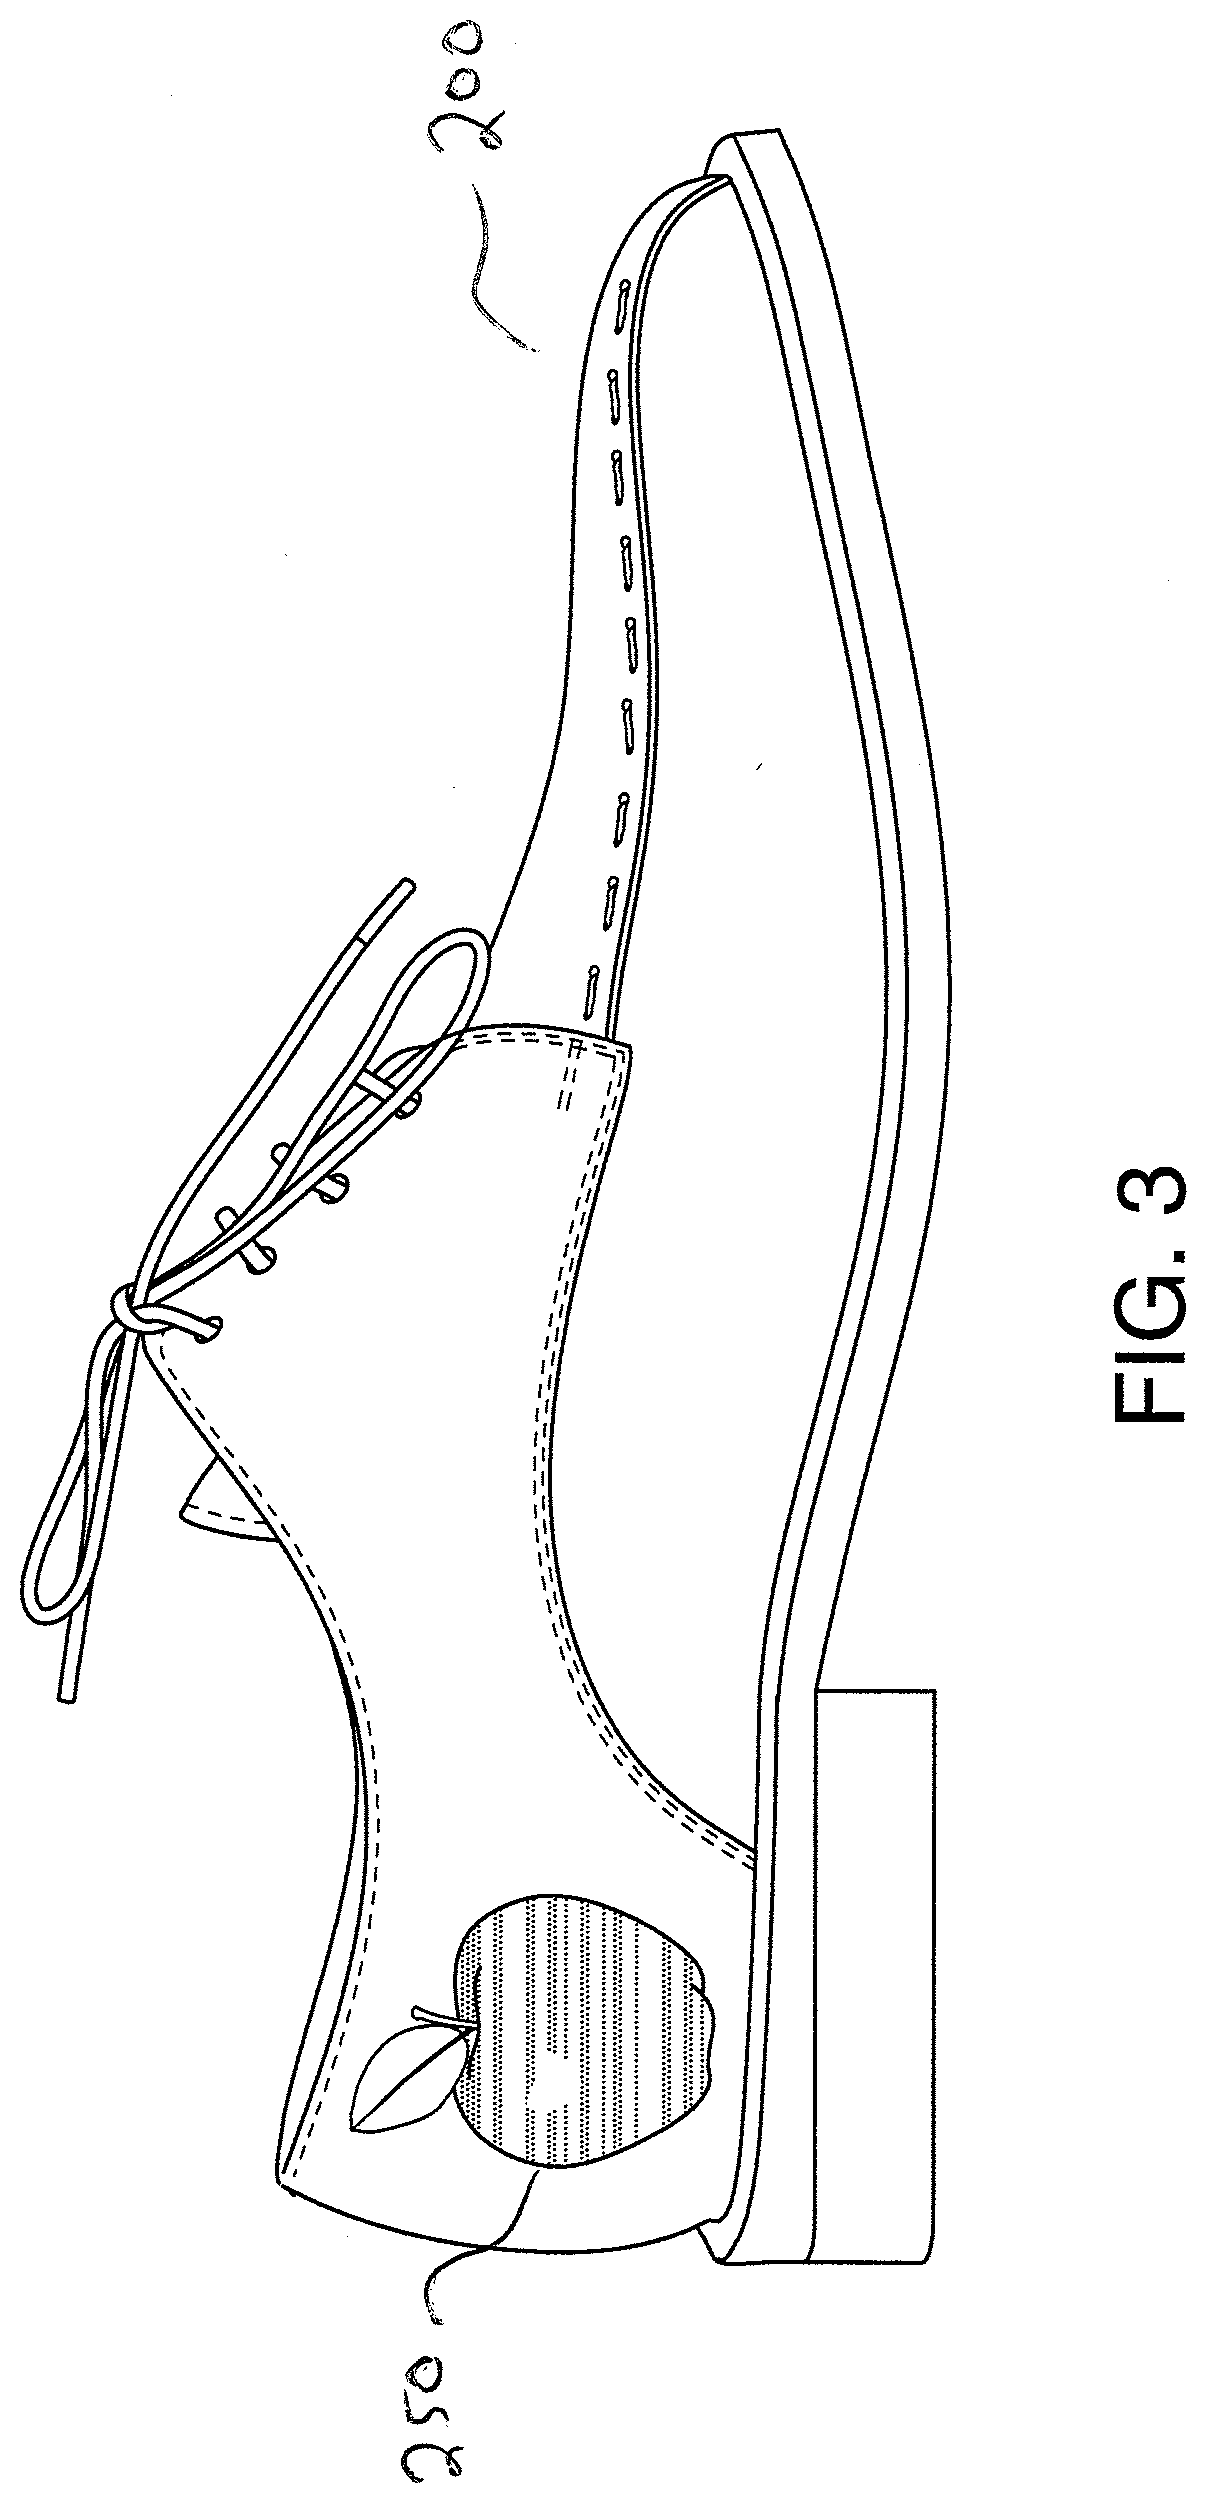 Method of customizing footwear